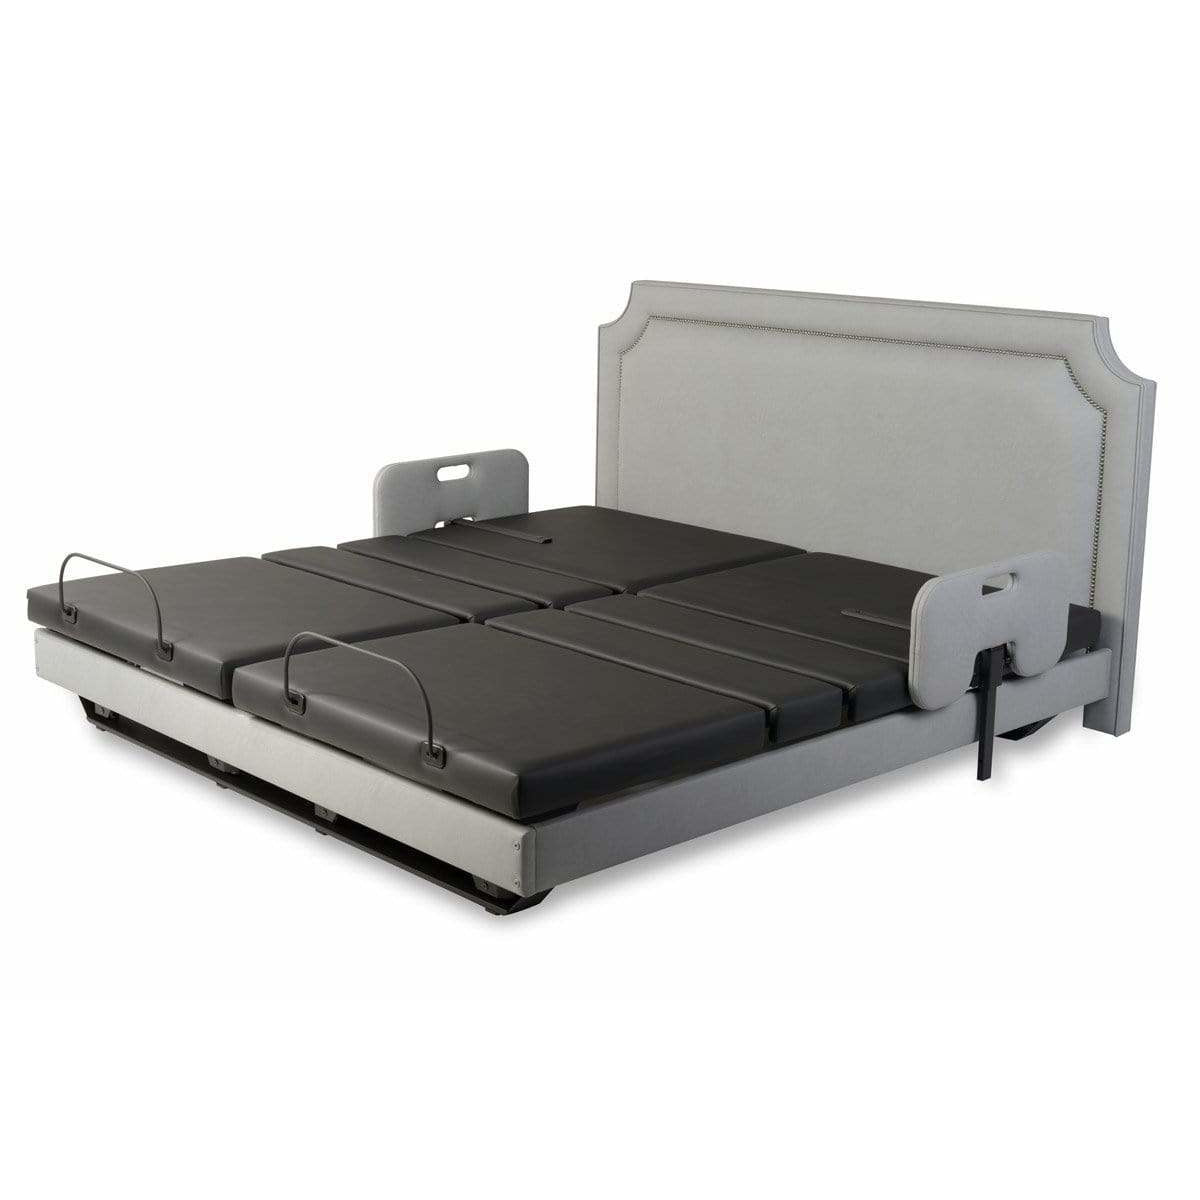 Adjustable Beds & Bed Bases